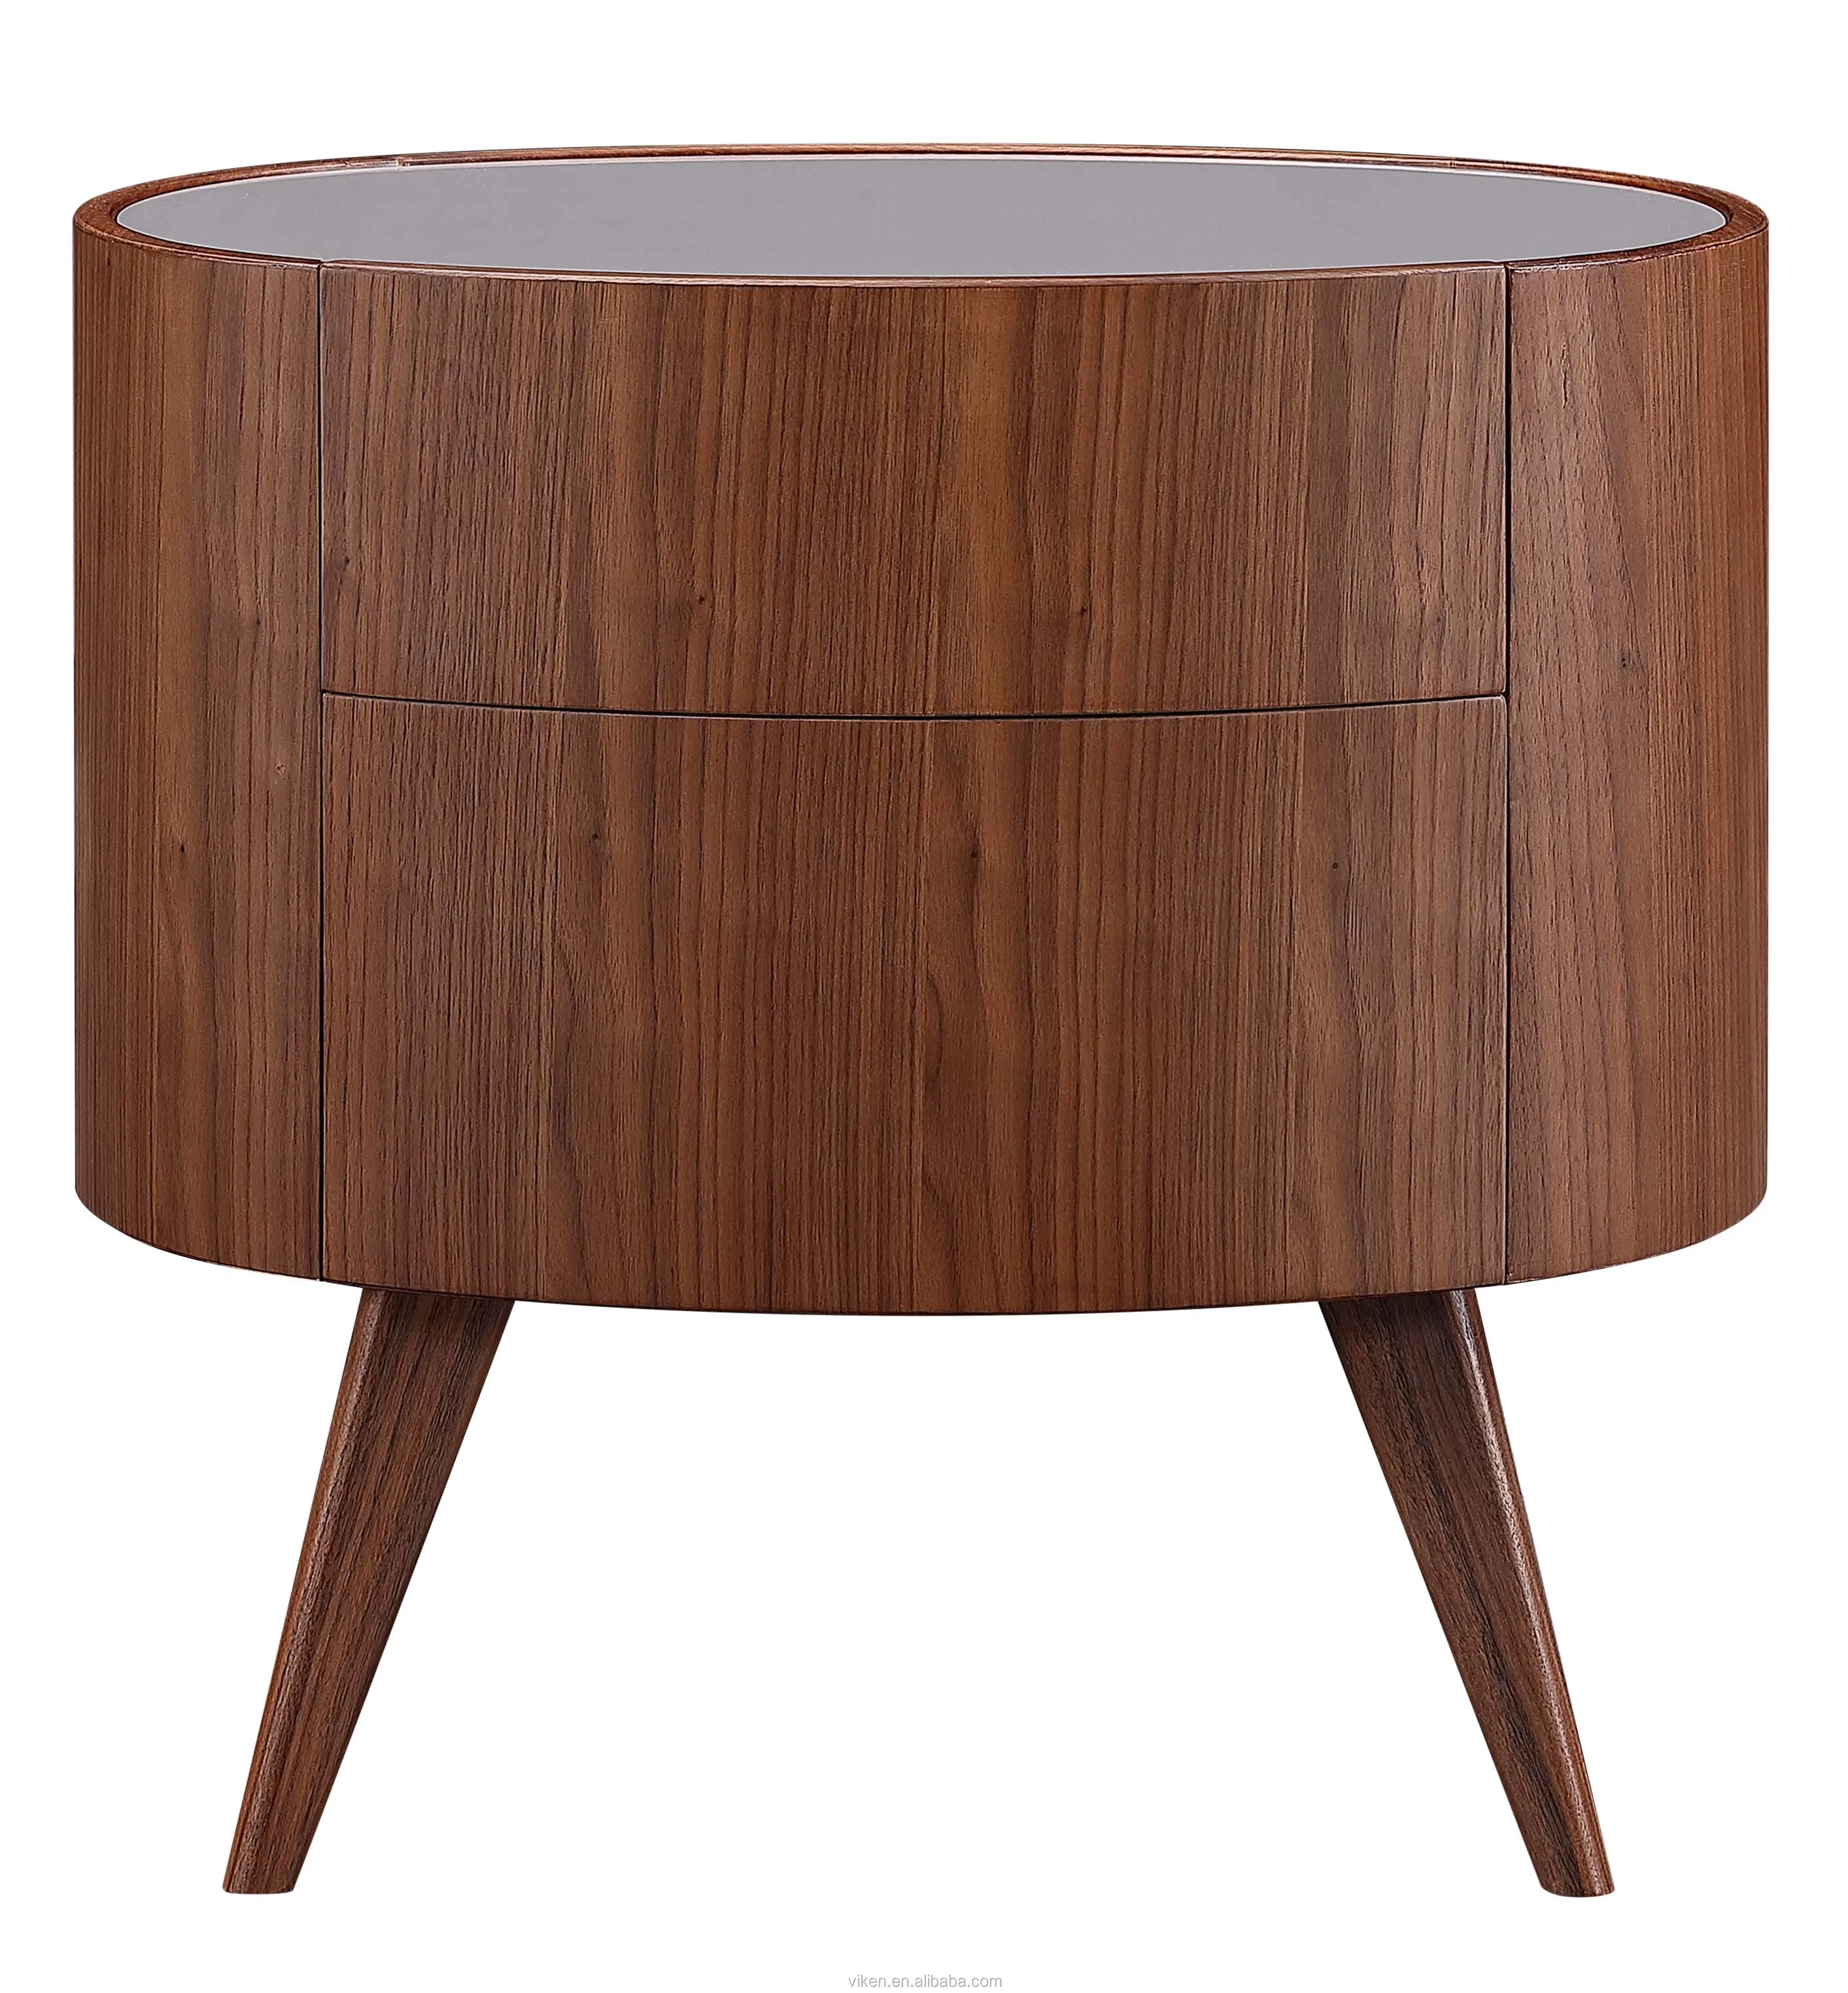 Bedroom Furniture Round Bedside Table For Home Modern Design Glass Top